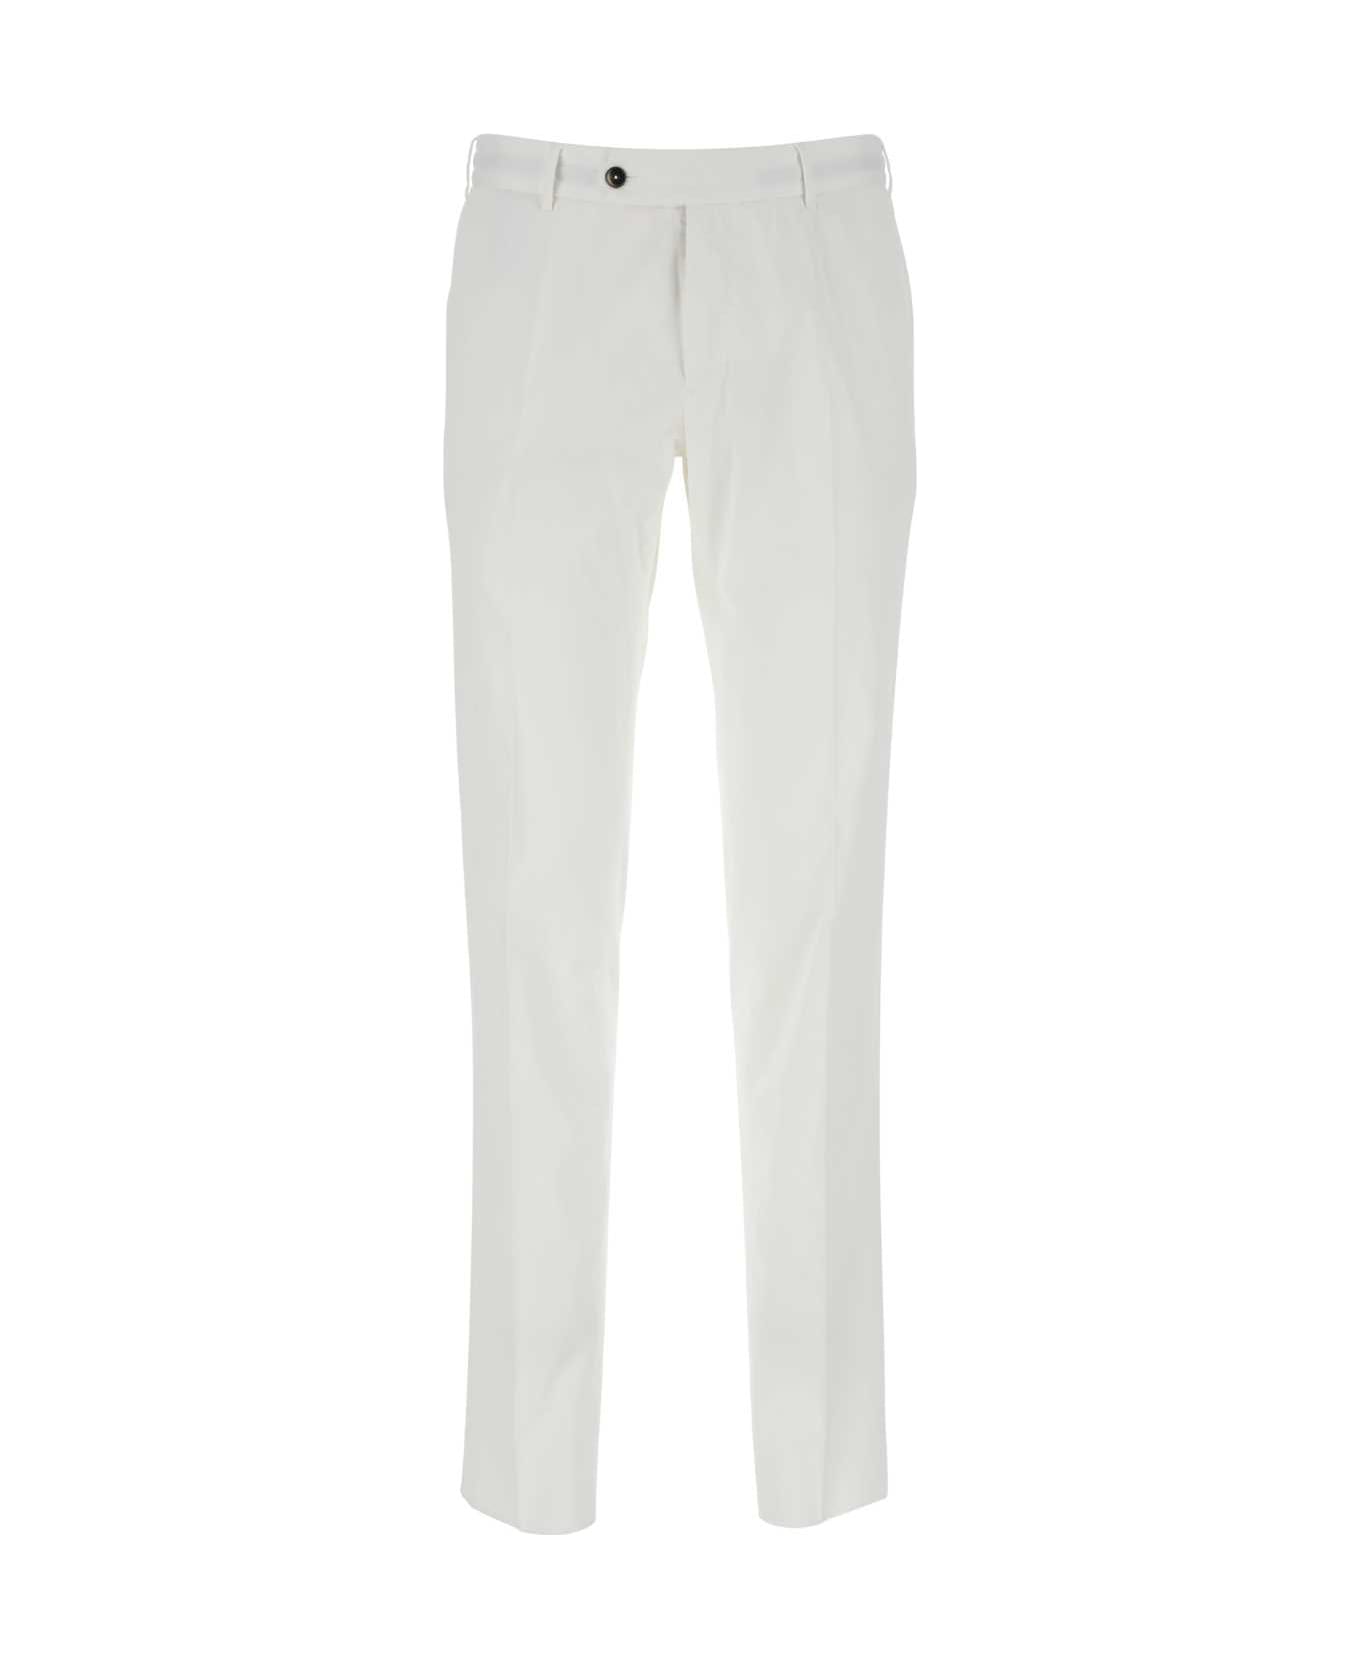 PT Torino White Stretch Cotton Pant - Y010